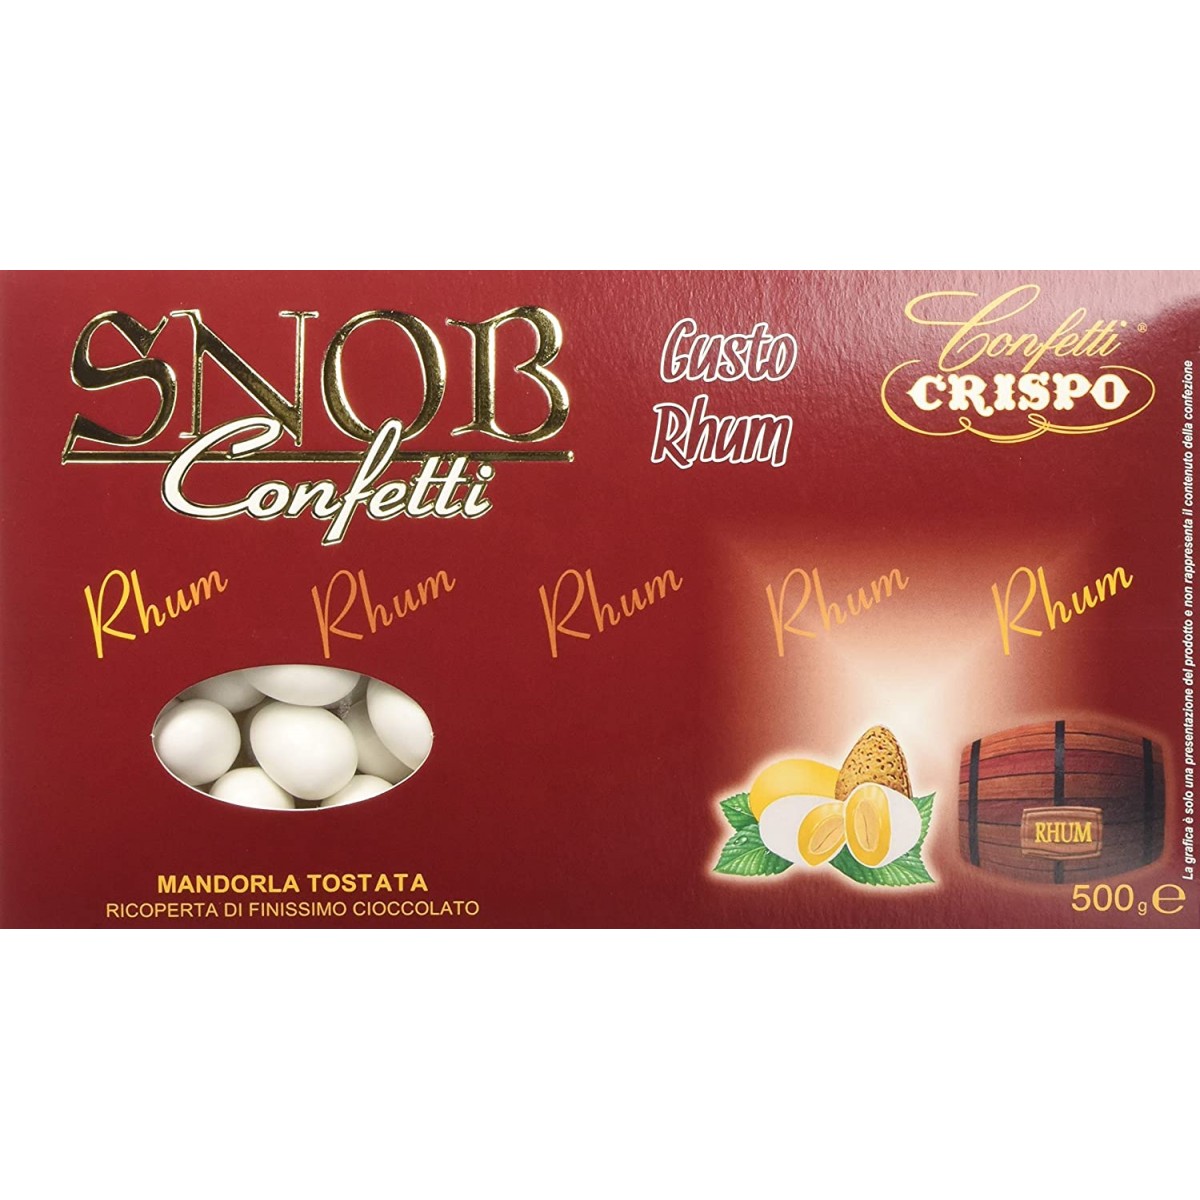 Kit Confetti Crispo Snob Rhum, 4 conf. da 500 g [2 kg]